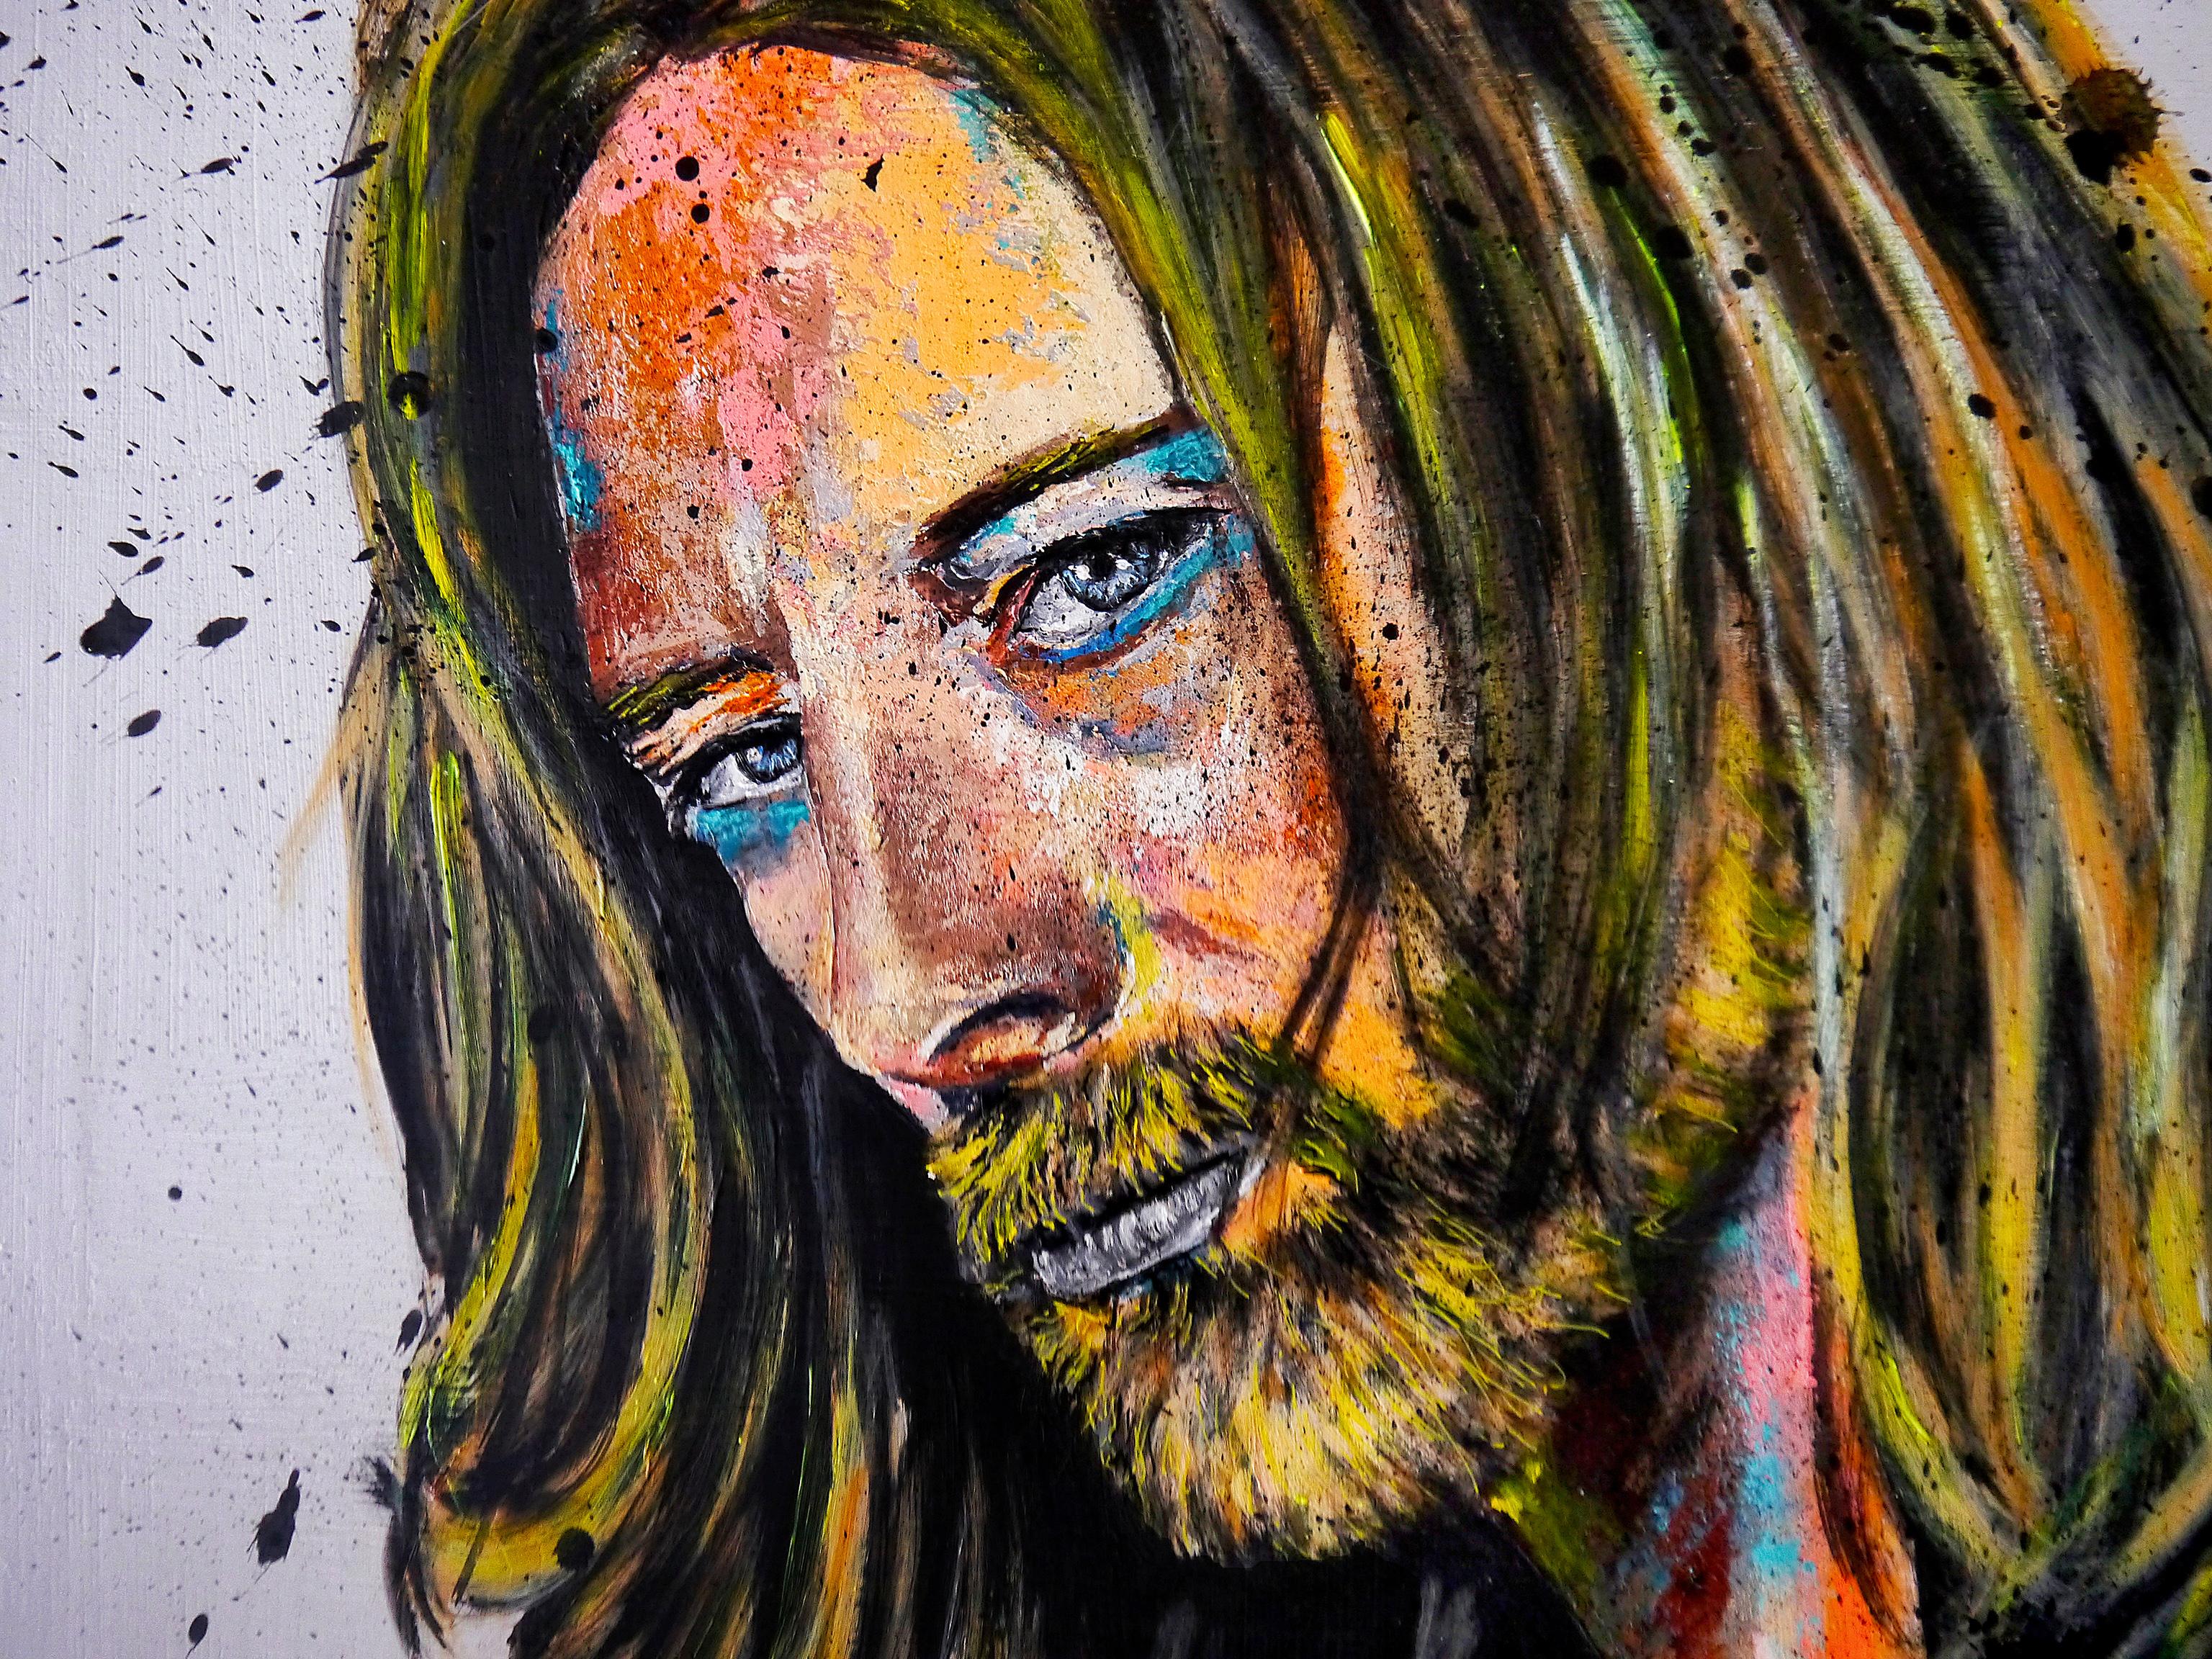 French School - Portrait Thom Yorke - Radiohead - Oil Impressionist - Painting by Bazevian DelaCapuciniere